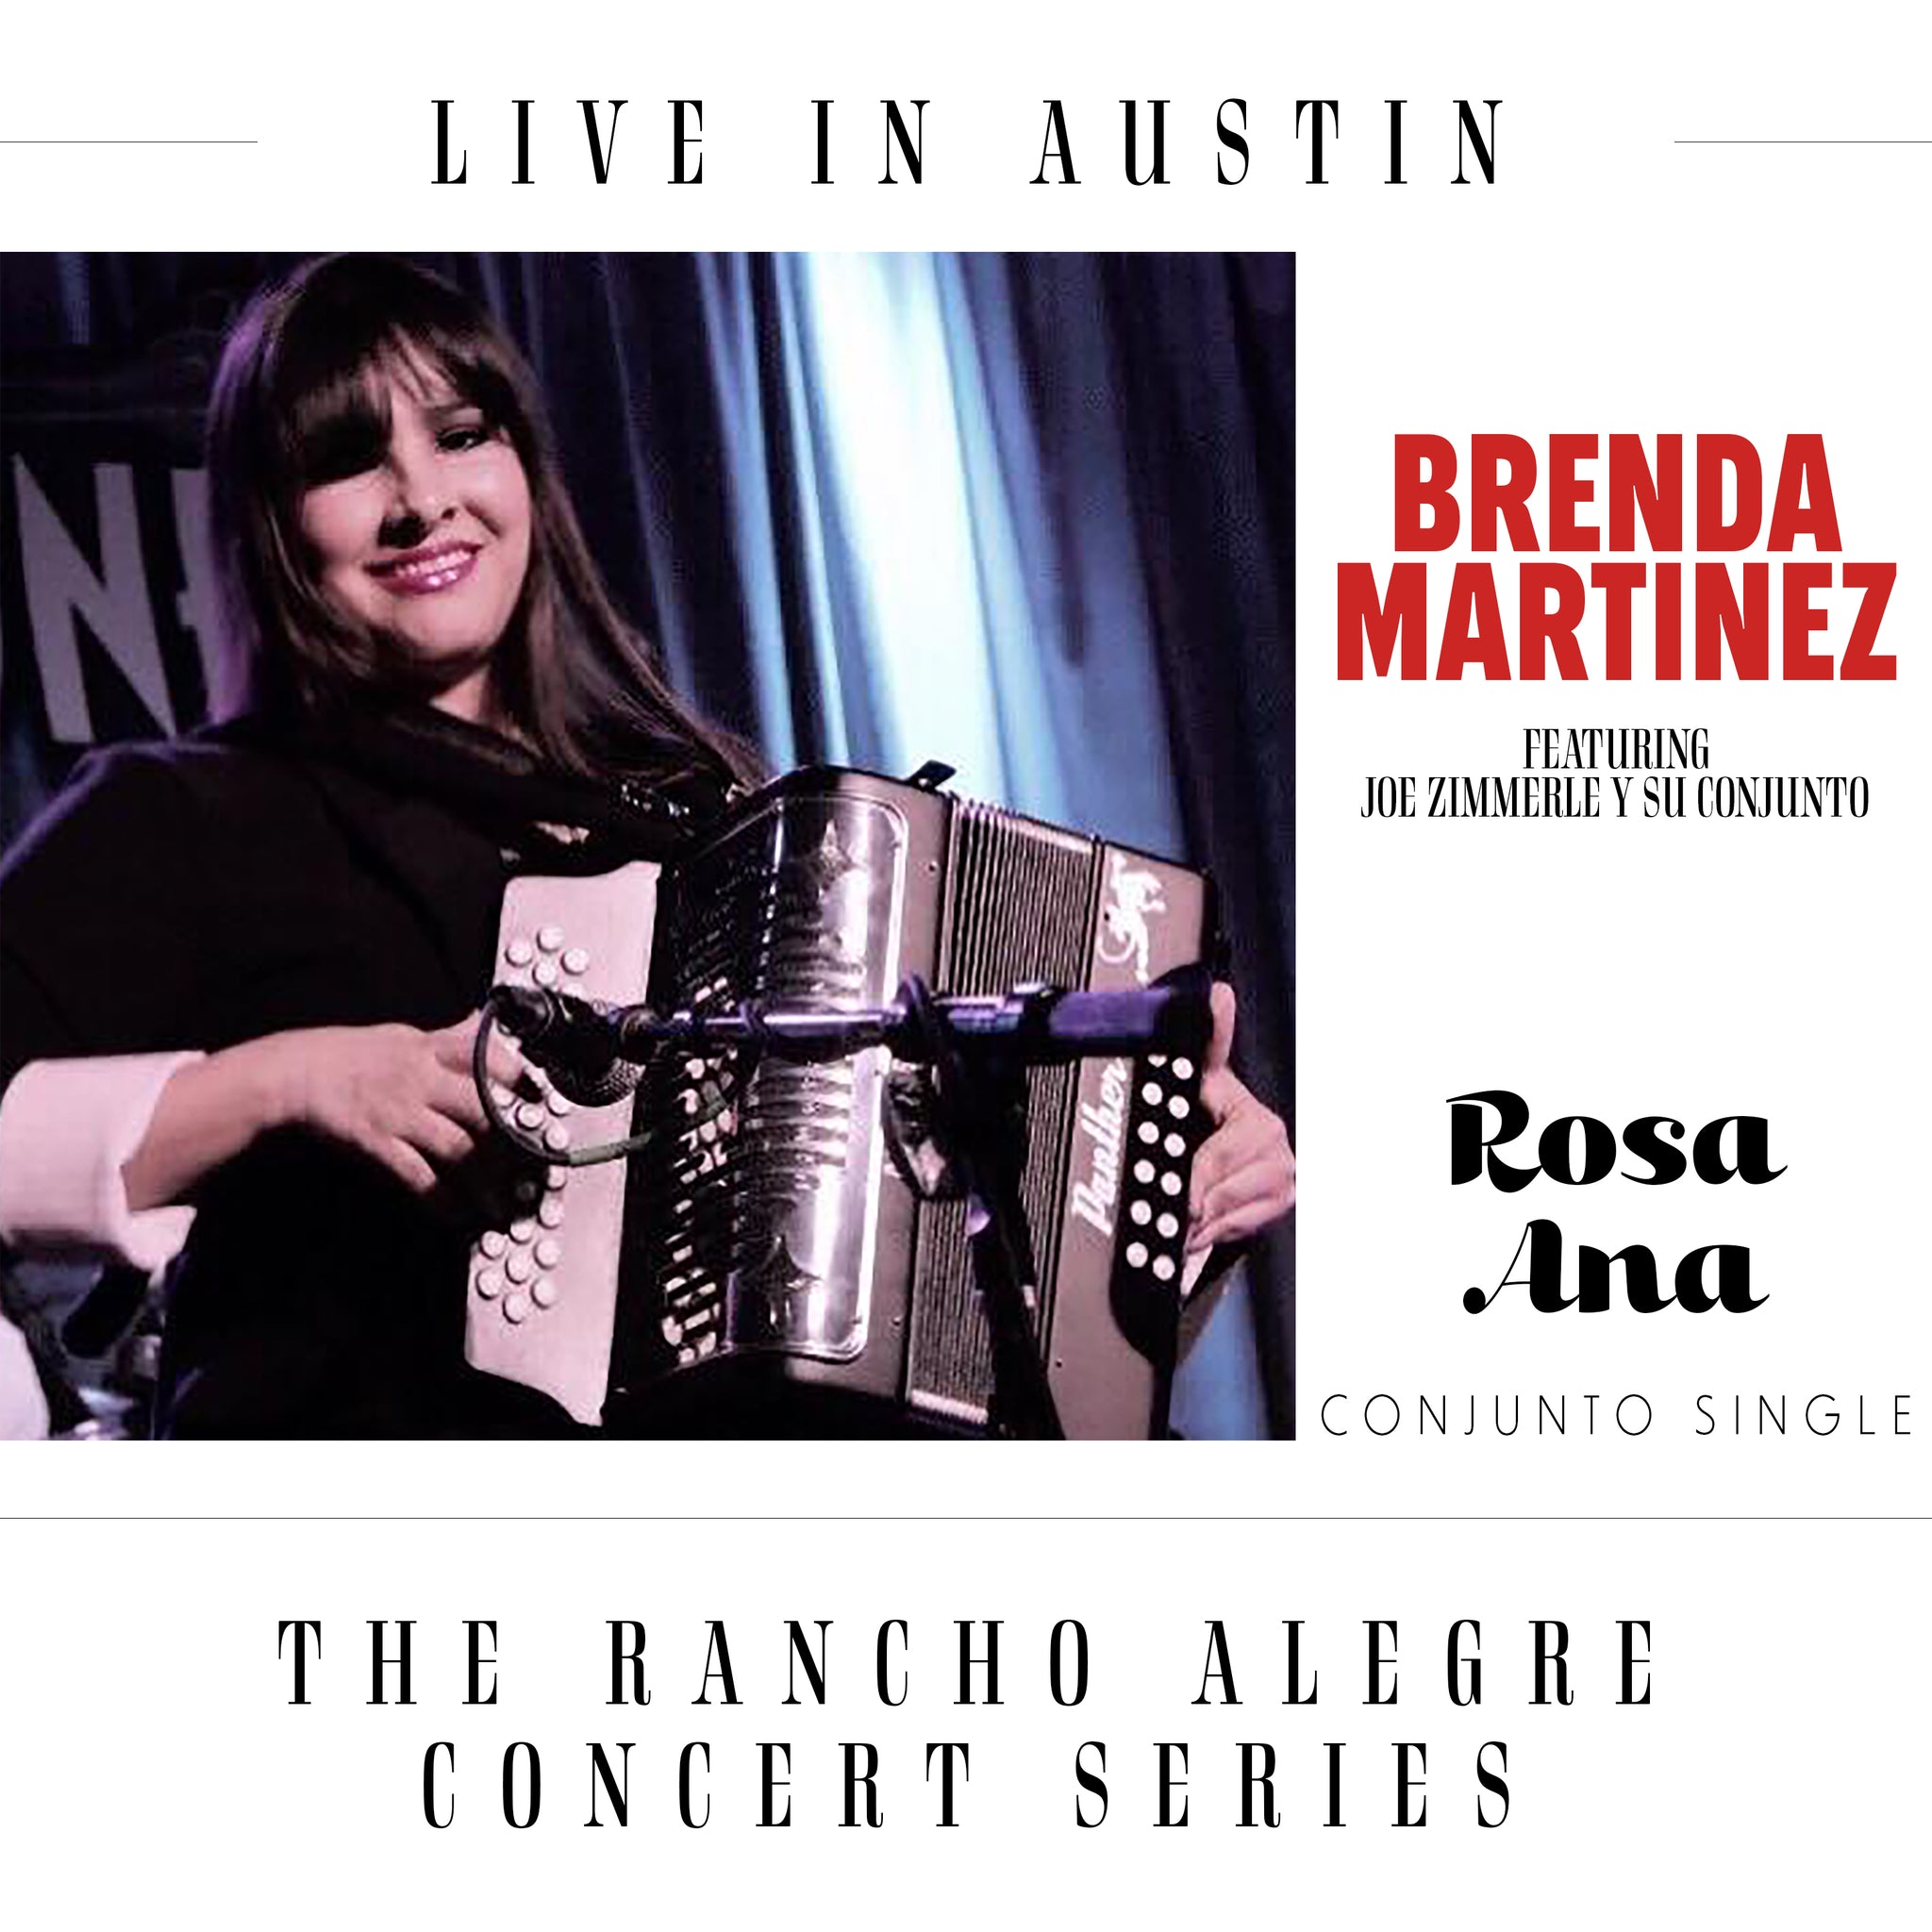 CD Single - Brenda Martinez - "Rosa Ana" feat. Joe Zimmerle y Su Conjunto